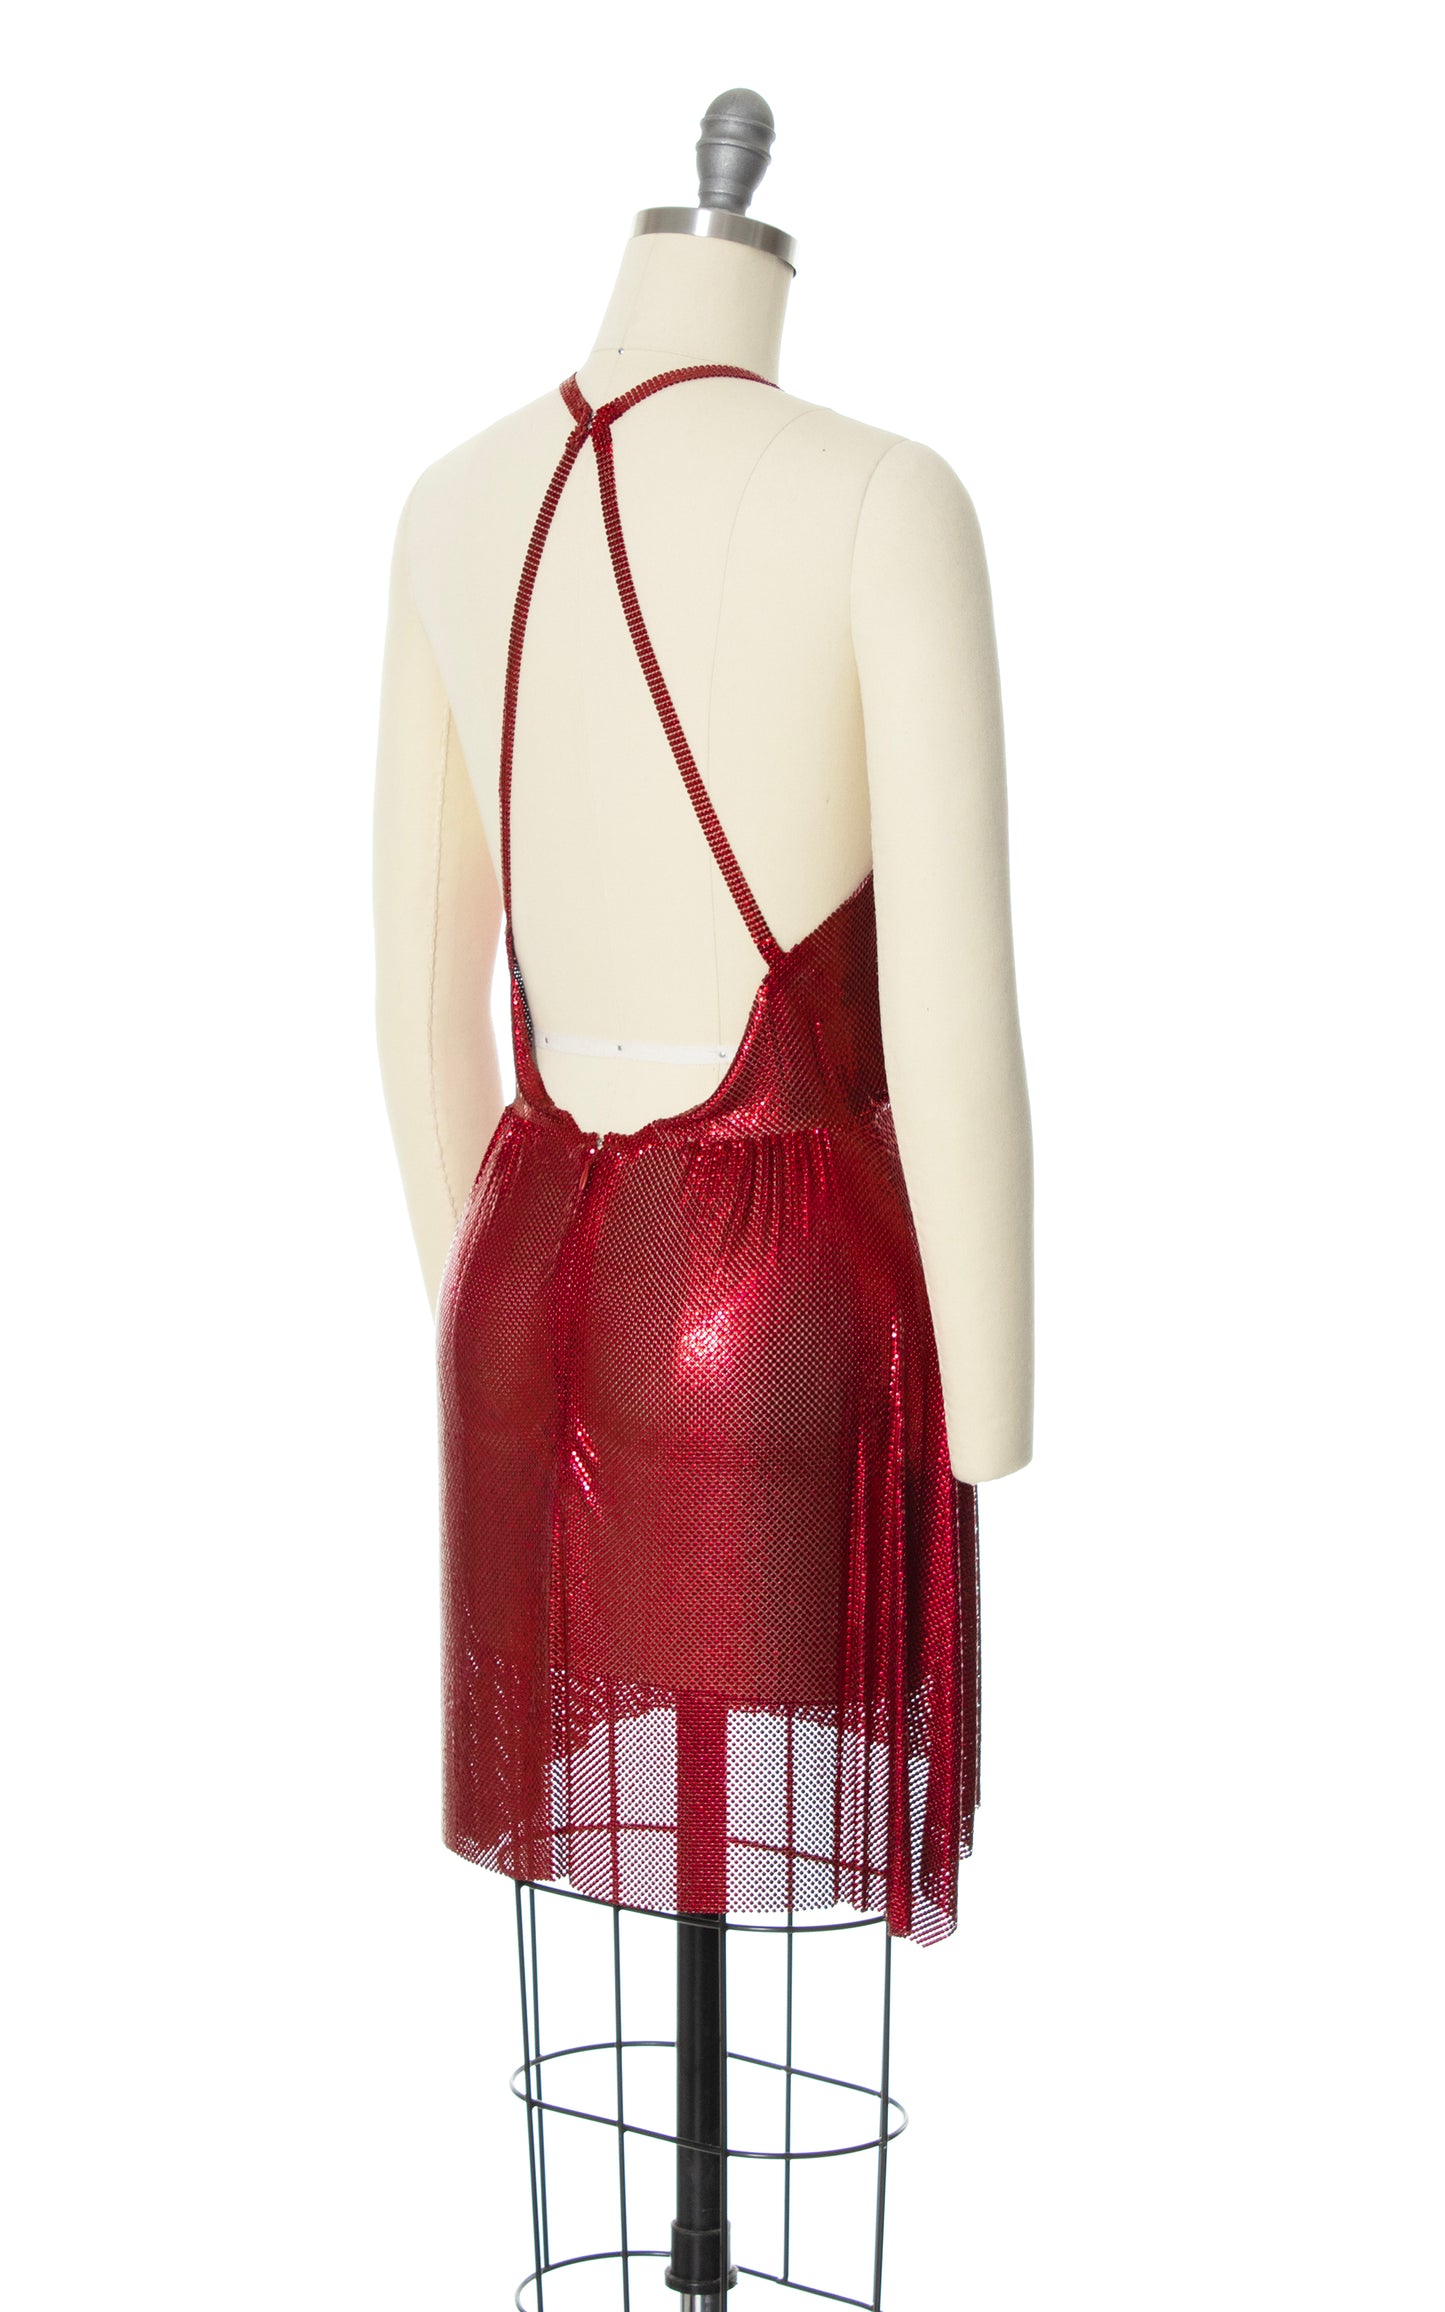 FANNIE SCHIAVONI Red Metal Mesh Mini Dress 1970s 70s Style Designer Couture